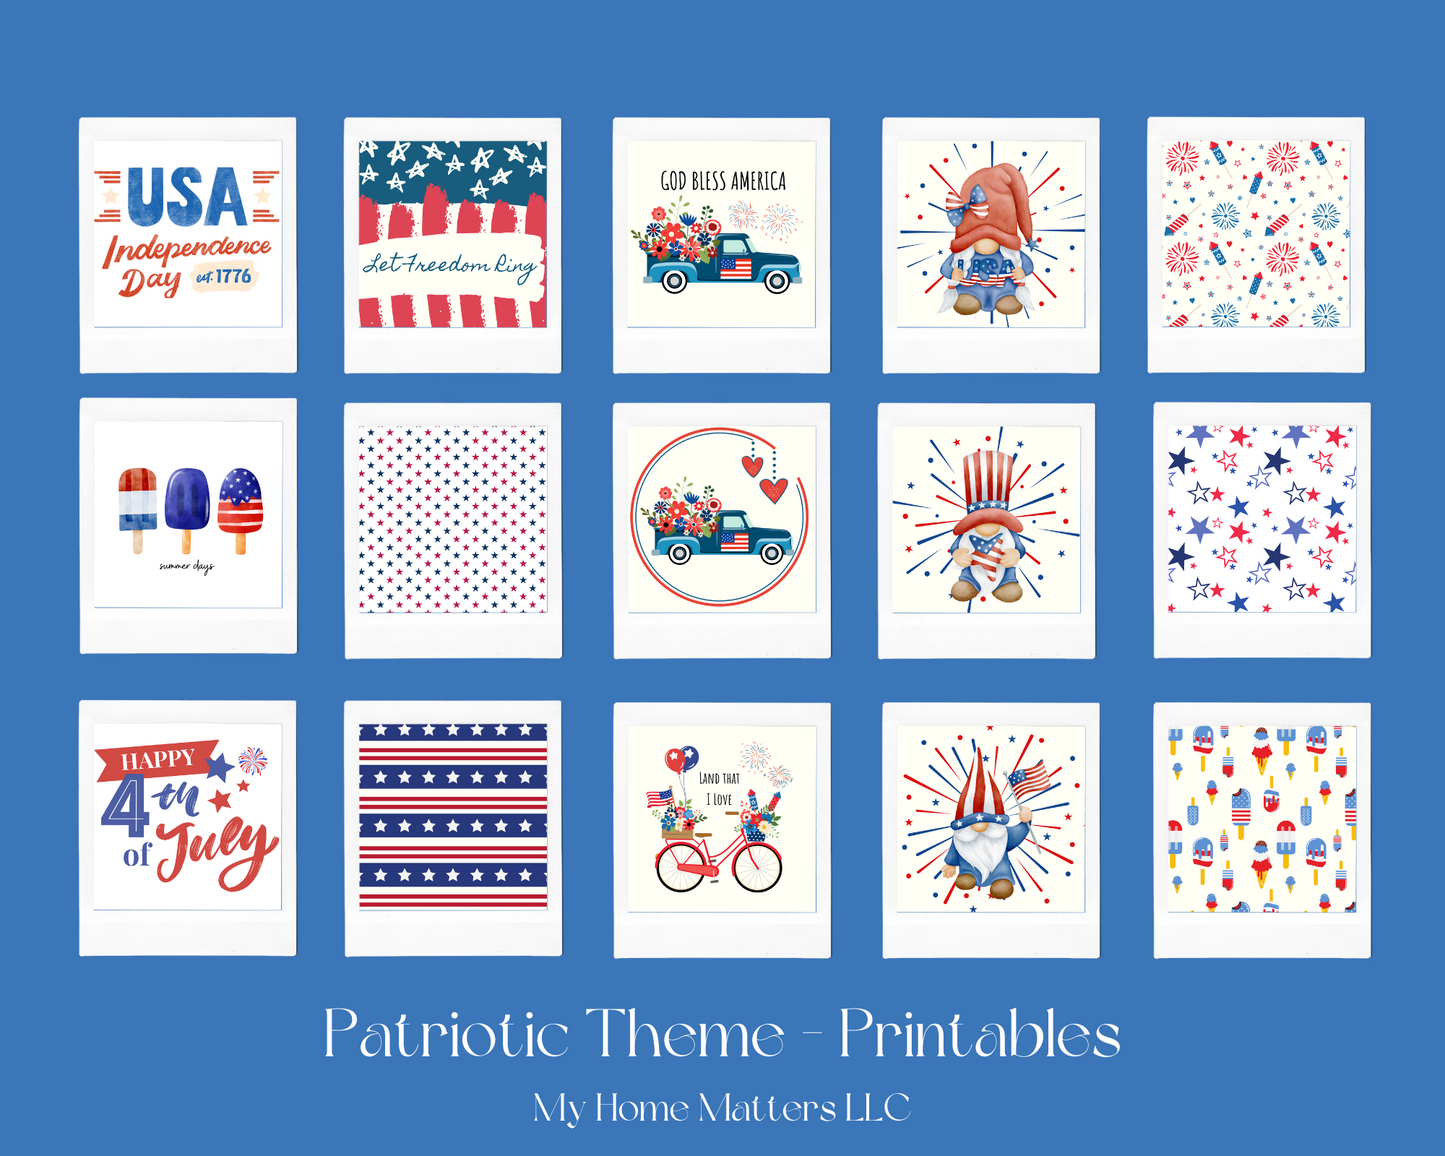 Printables - Patriotic Theme